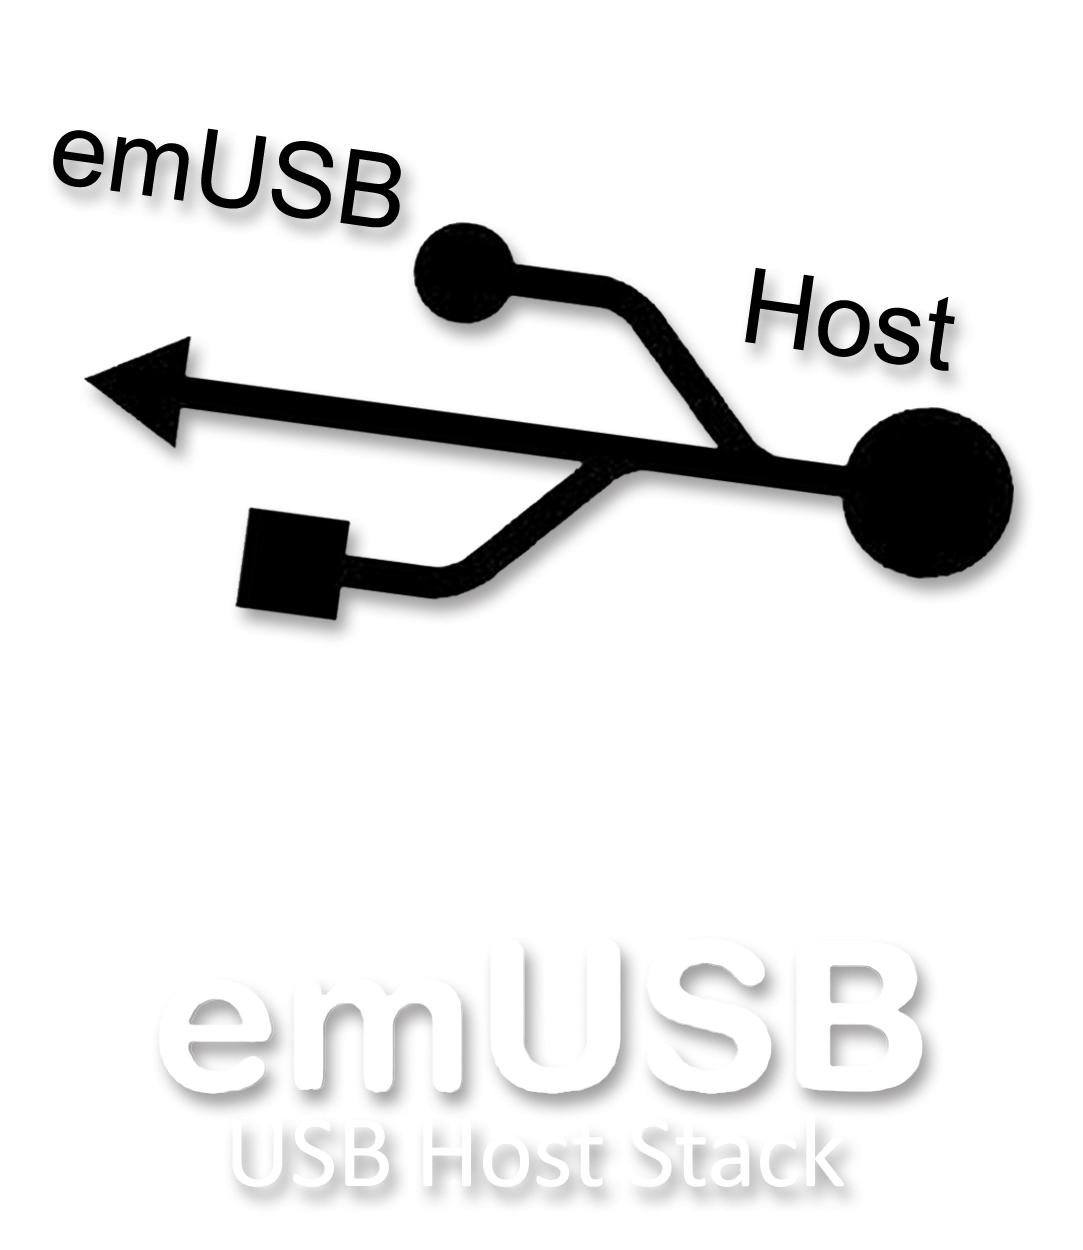 9.55.04 EMUSB HOSTPROBUNDL SSL USB HOST STACK, SOURCE CODE LIC, 1USER SEGGER